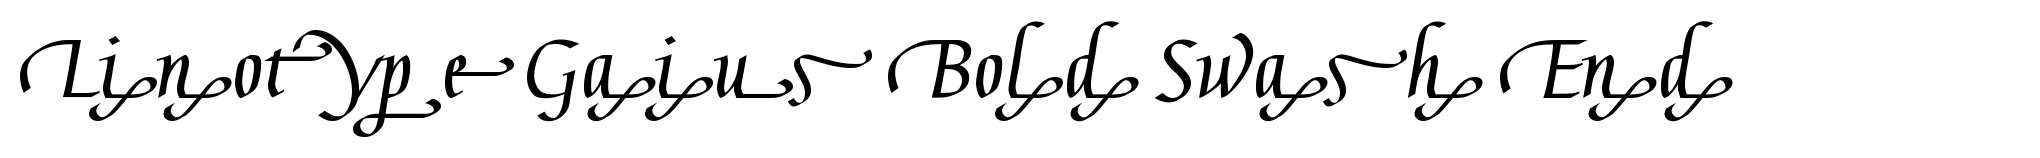 Linotype Gaius Bold Swash End image